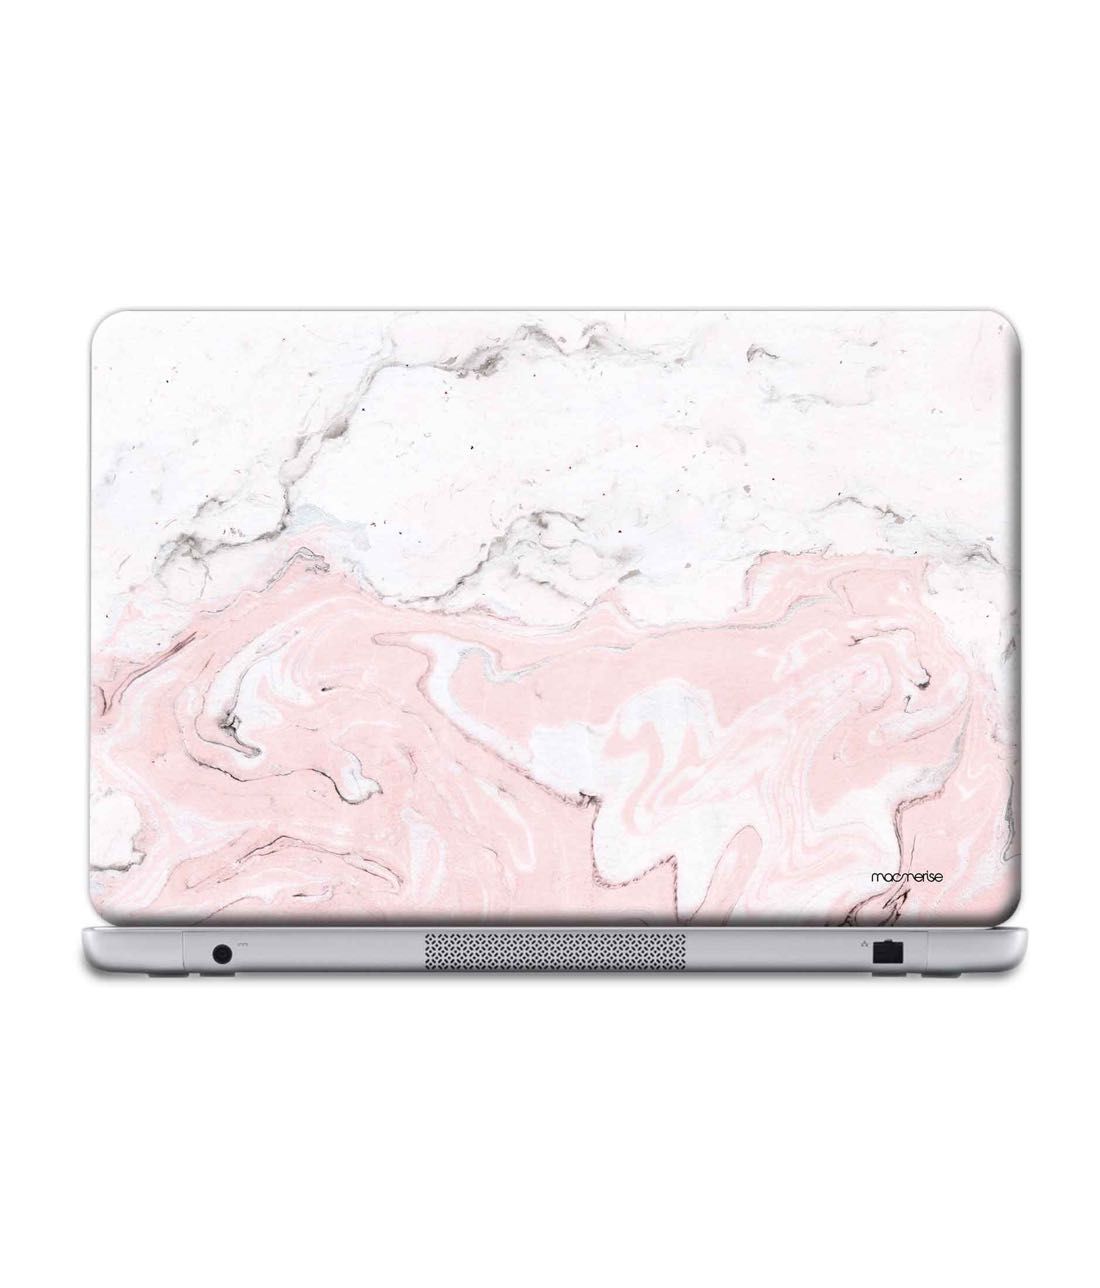 Buy Marble Rosa Verona Macmerise Skins for Laptop Dell Inspiron 15 - 3000  Series Online